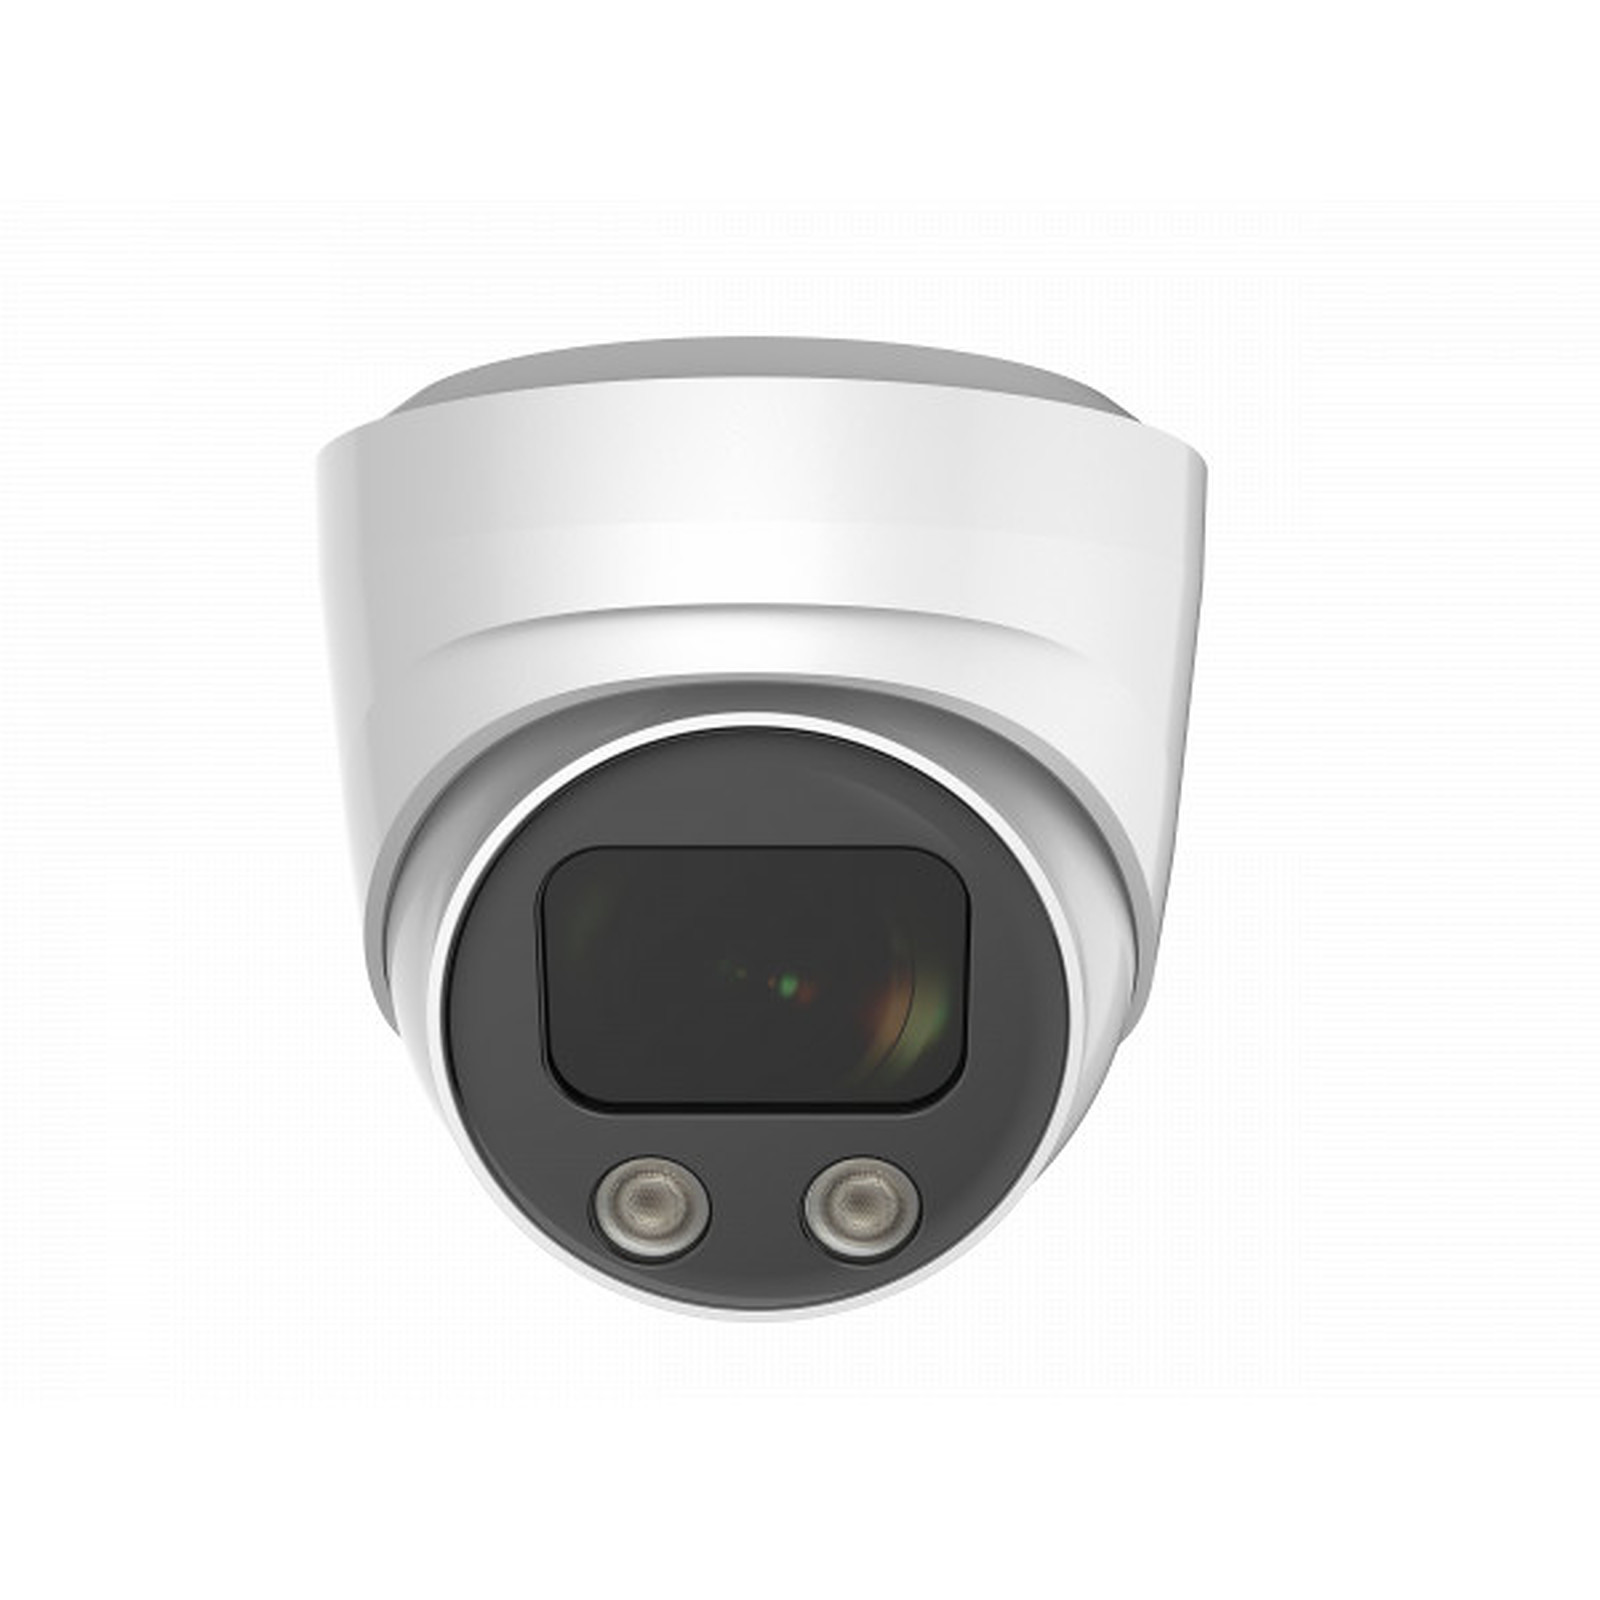 EC-VISION D4KAI - Camera de surveillance EC-Vision